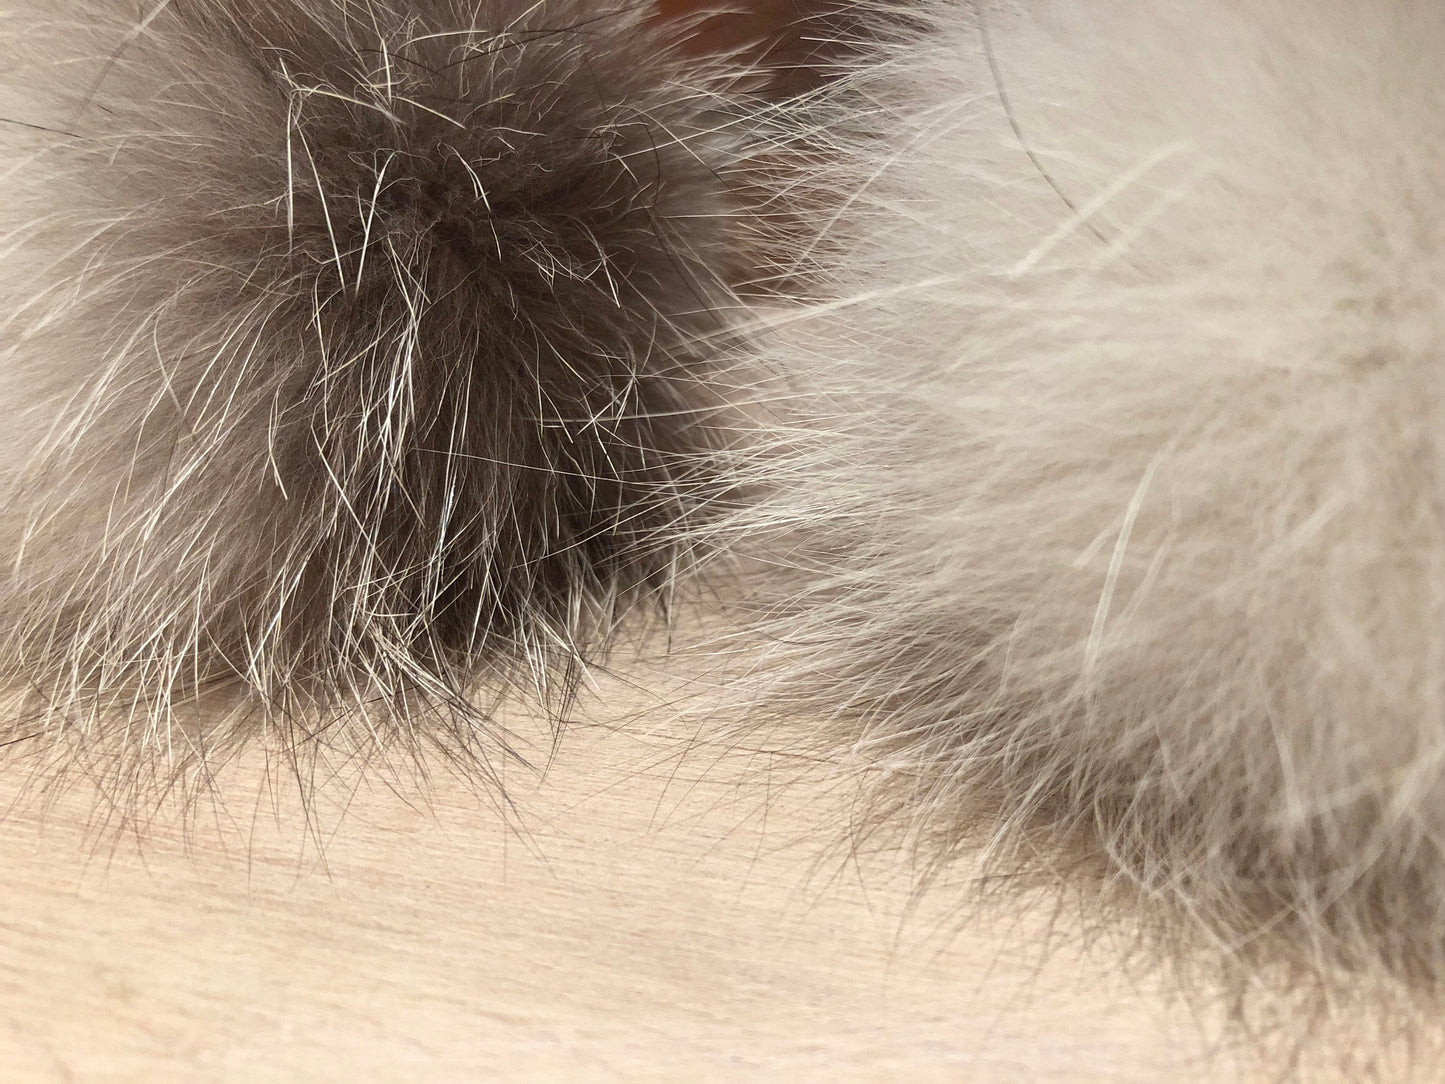 Platinum Arctic Shadow Fox Fur Pom, 3.5 Inch